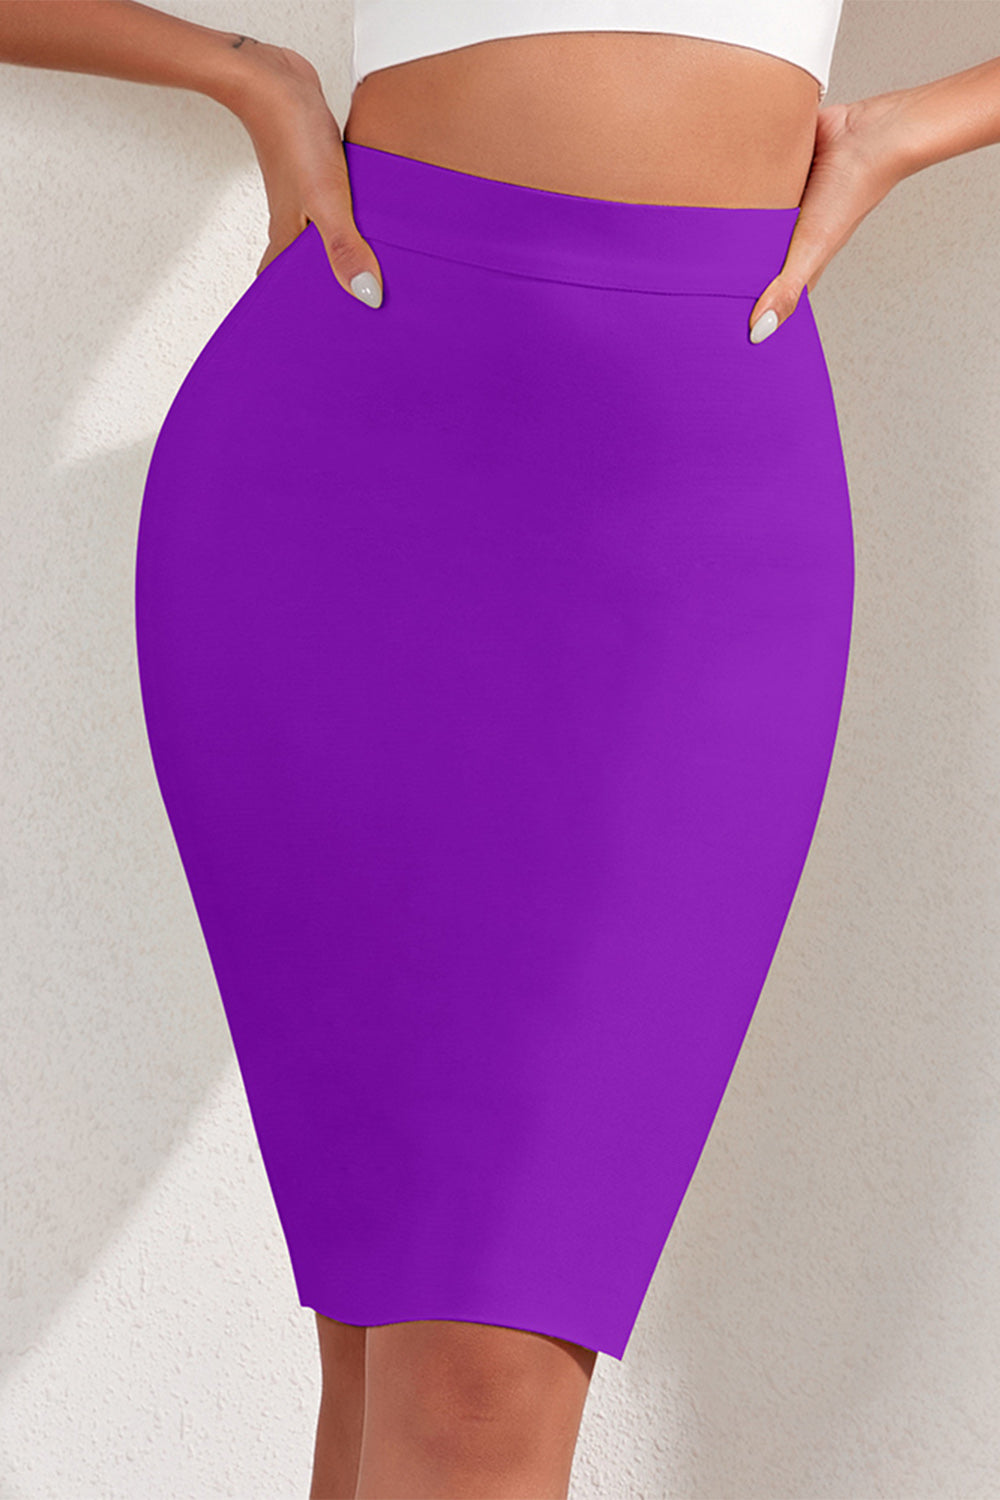 purple skirt, purple bandage skirt, purple pencil skirt, skirt, bandage skirt, high waist bandage skirt, knee length bandage skirt, solid color skirt, pencil skirt, office skirt, bandage skirt for women, women’s bottom